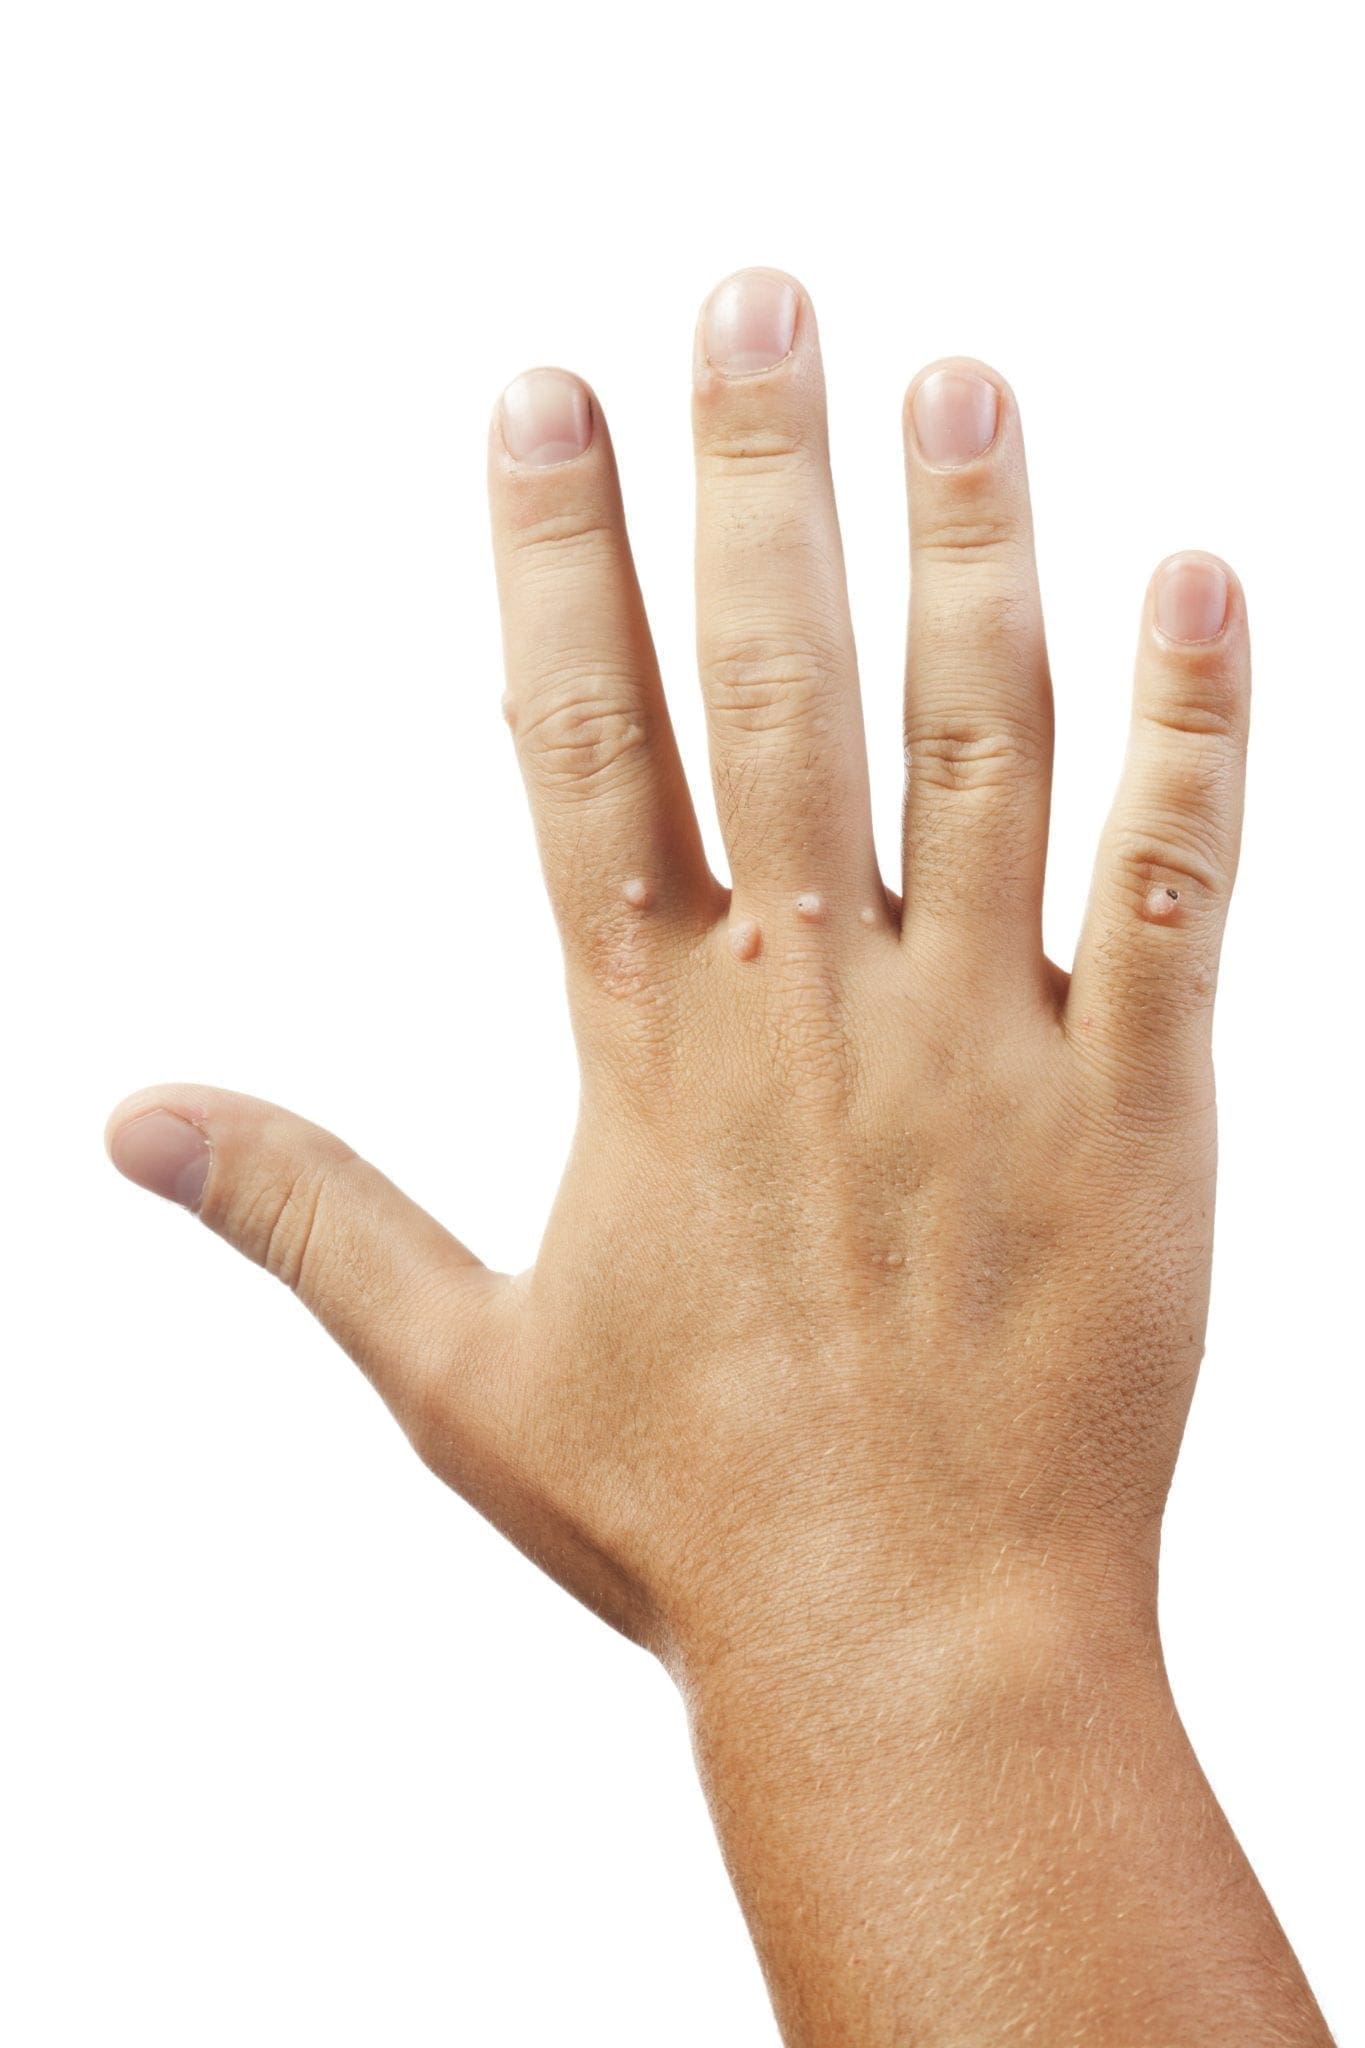 Hpv virus warts on fingers